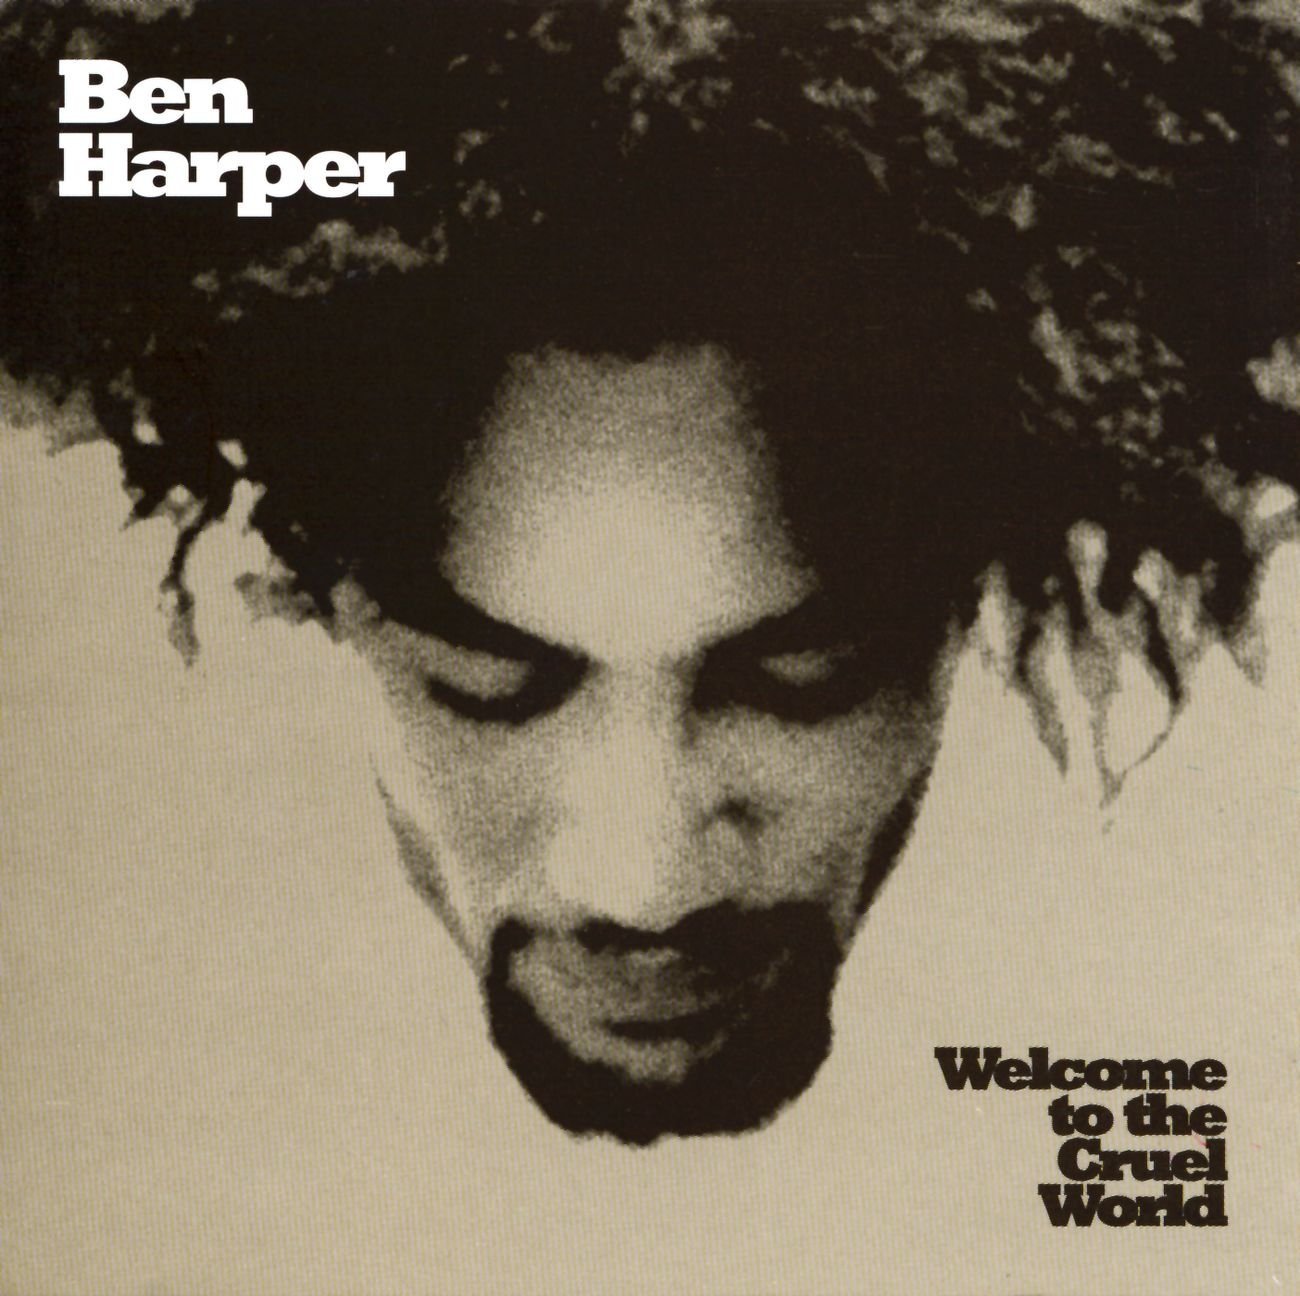 Ben Harper – Welcome to the cruel world